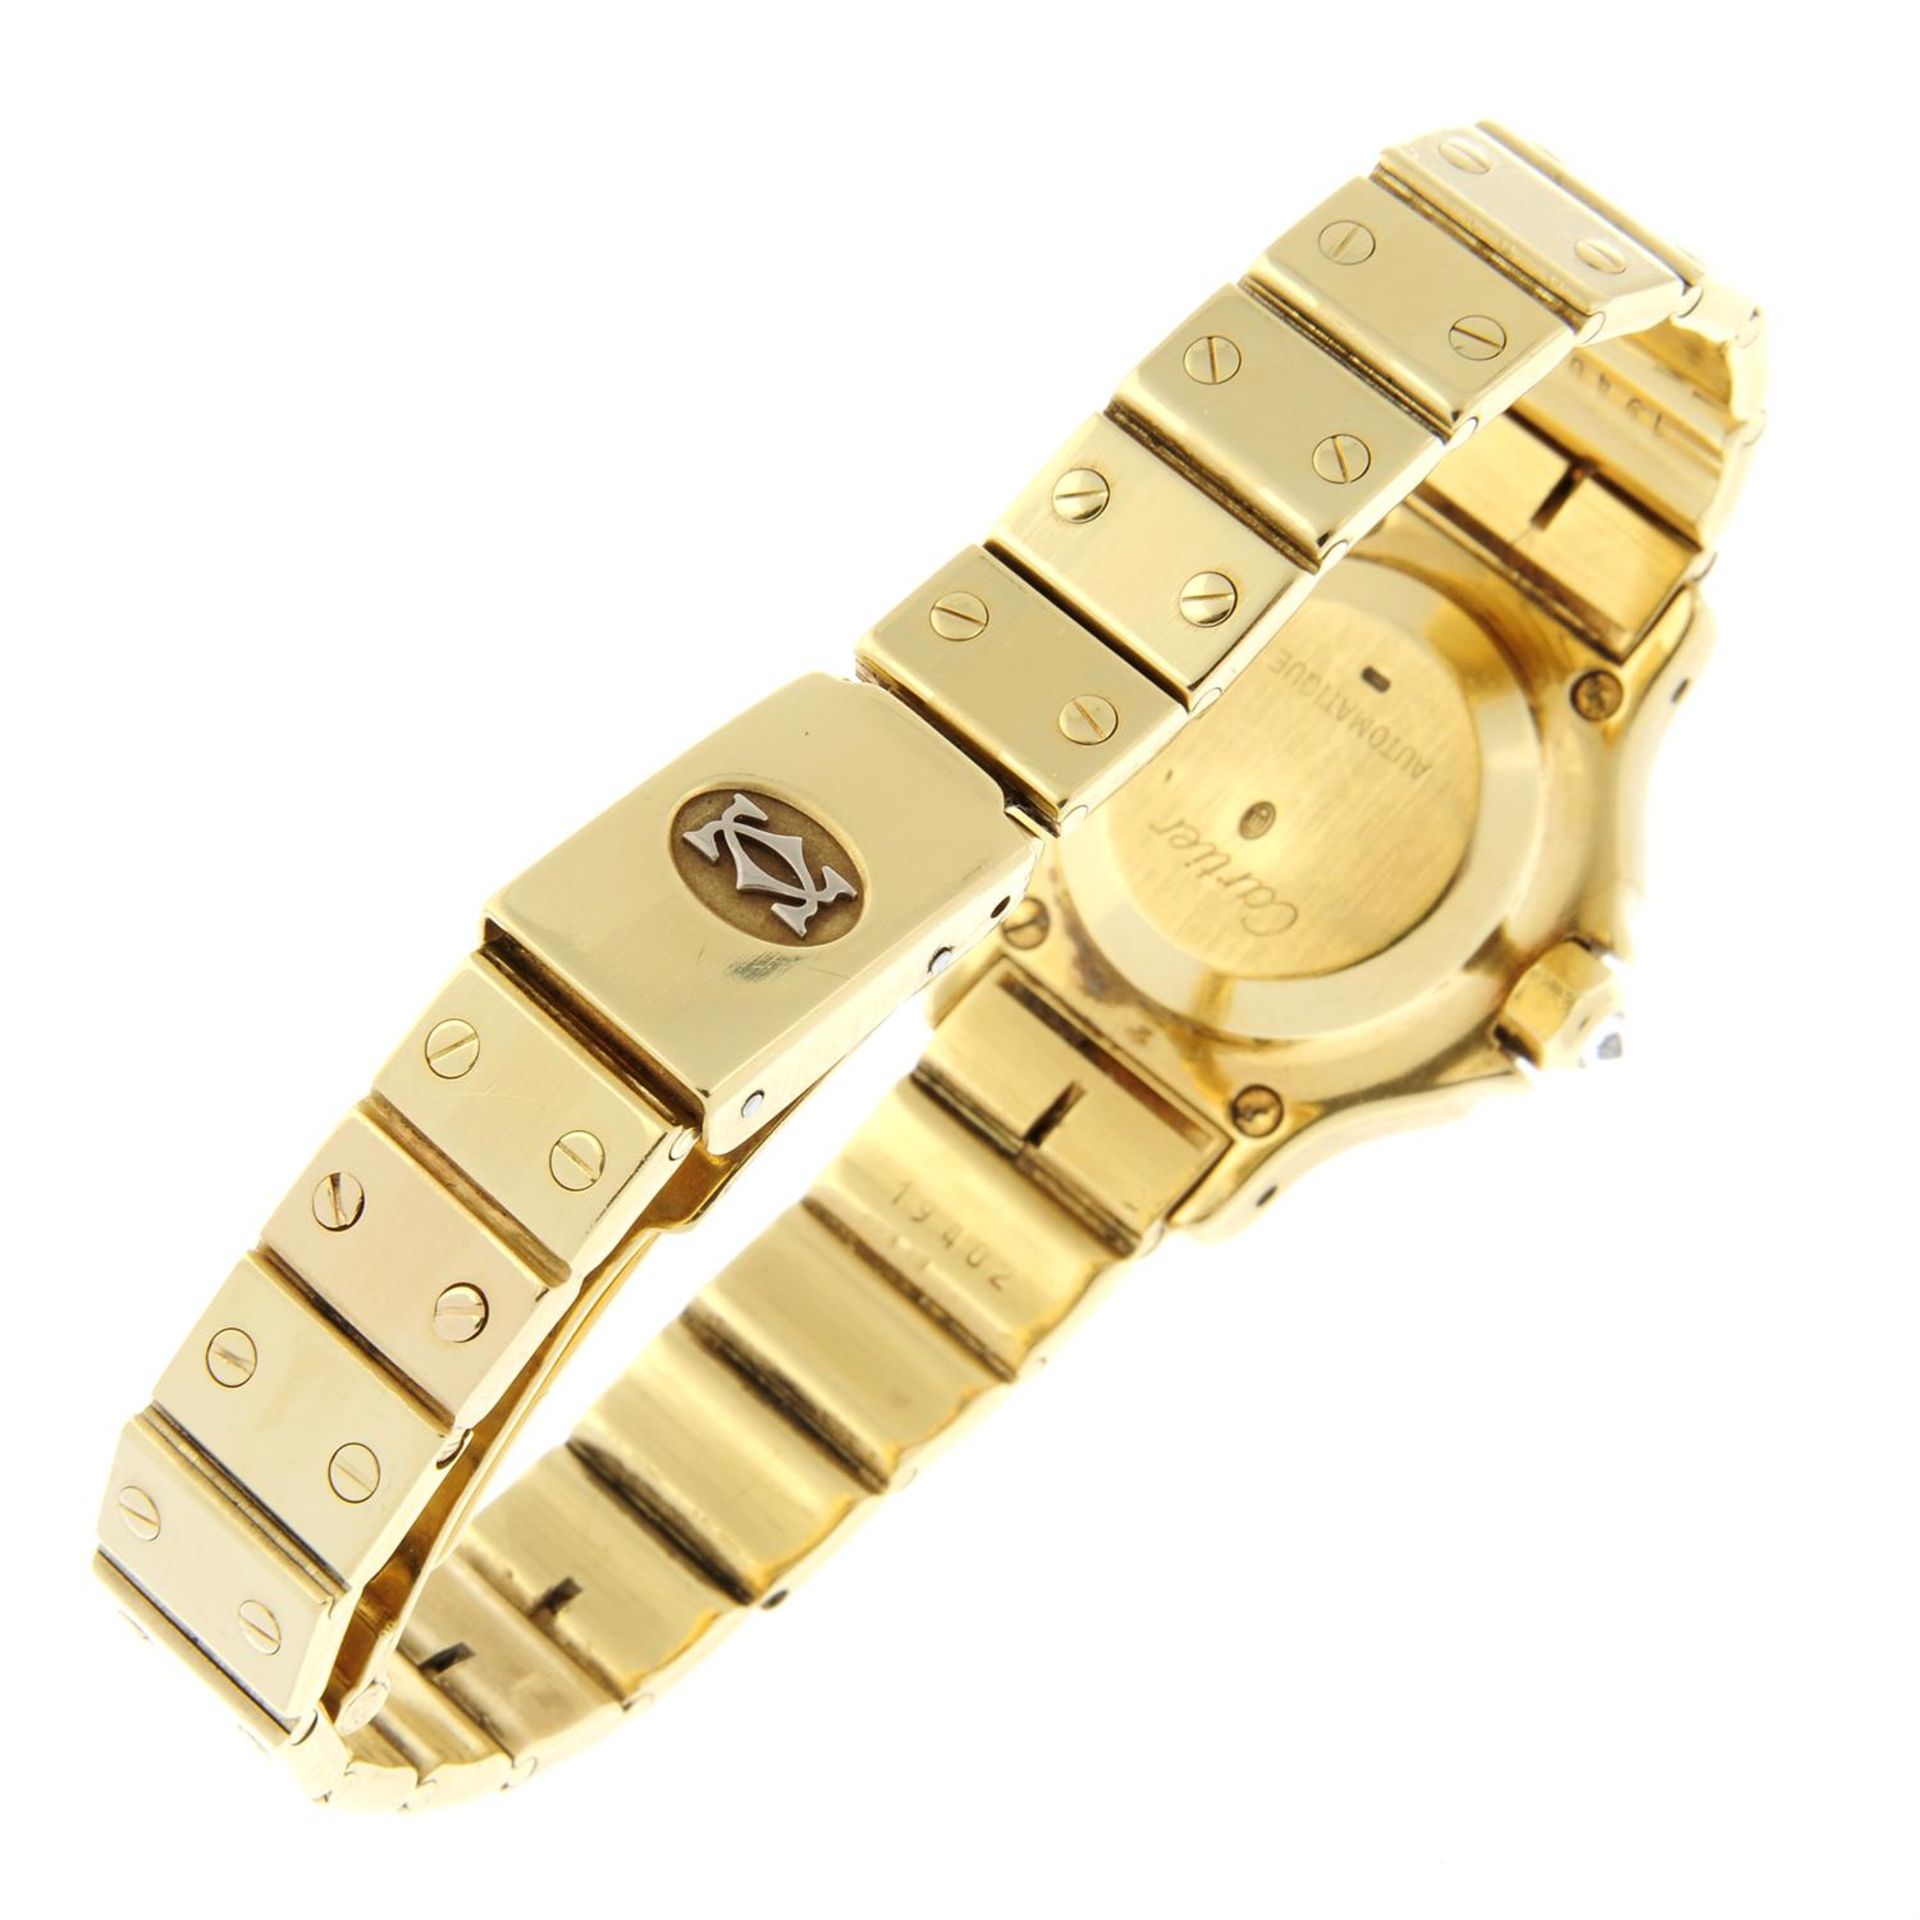 CARTIER - an 18ct yellow gold Santos Octagon bracelet watch, 24mm. - Image 2 of 6